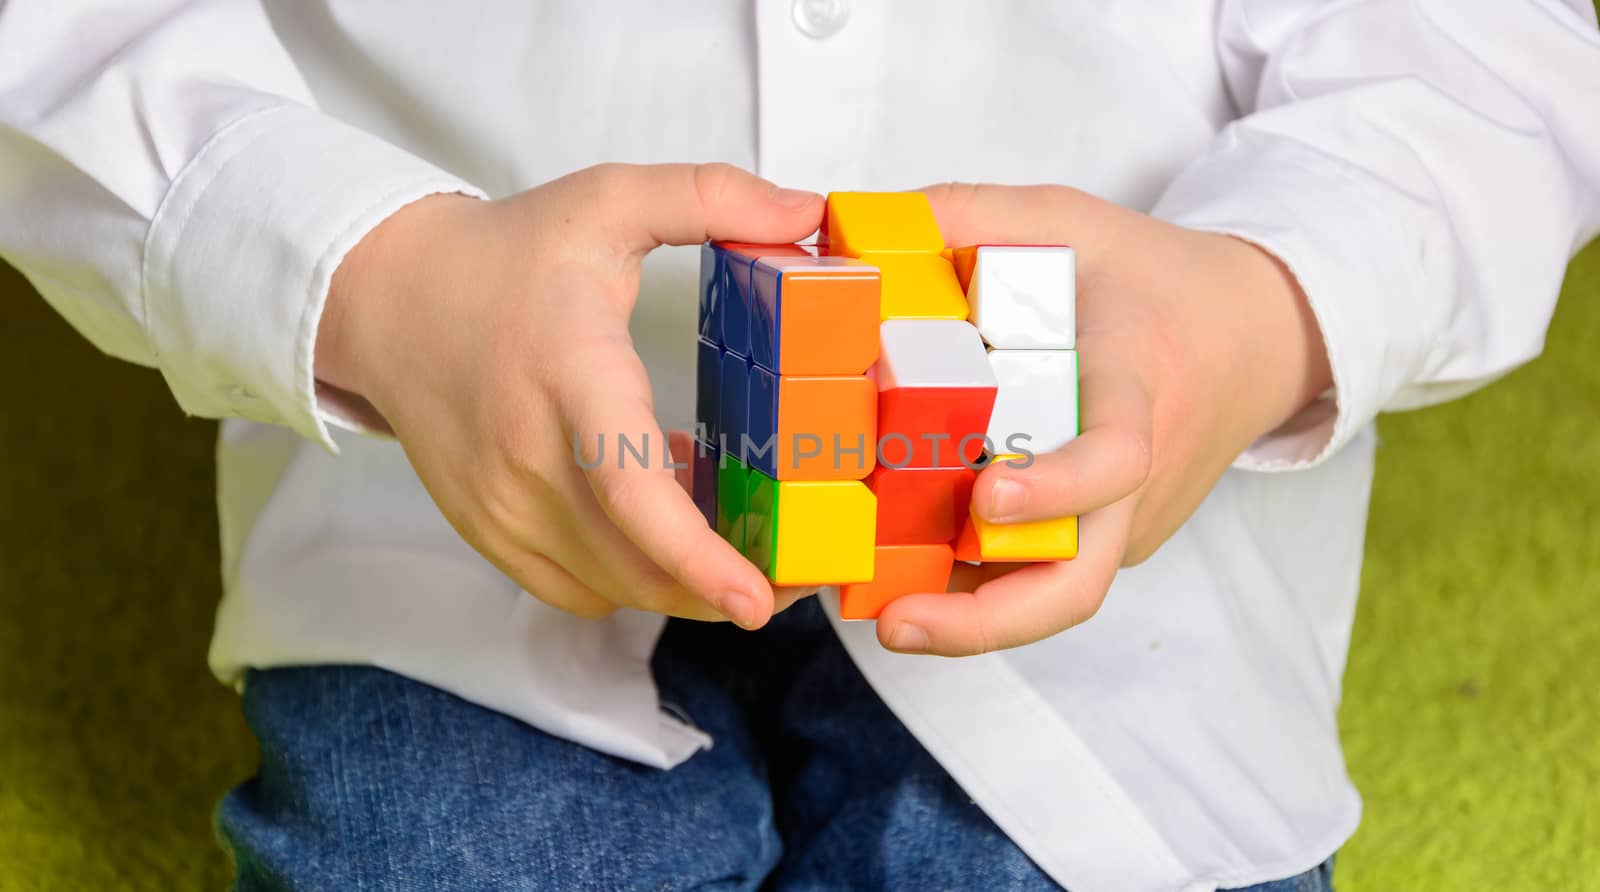 Child and Rubik's Cube by markova64el